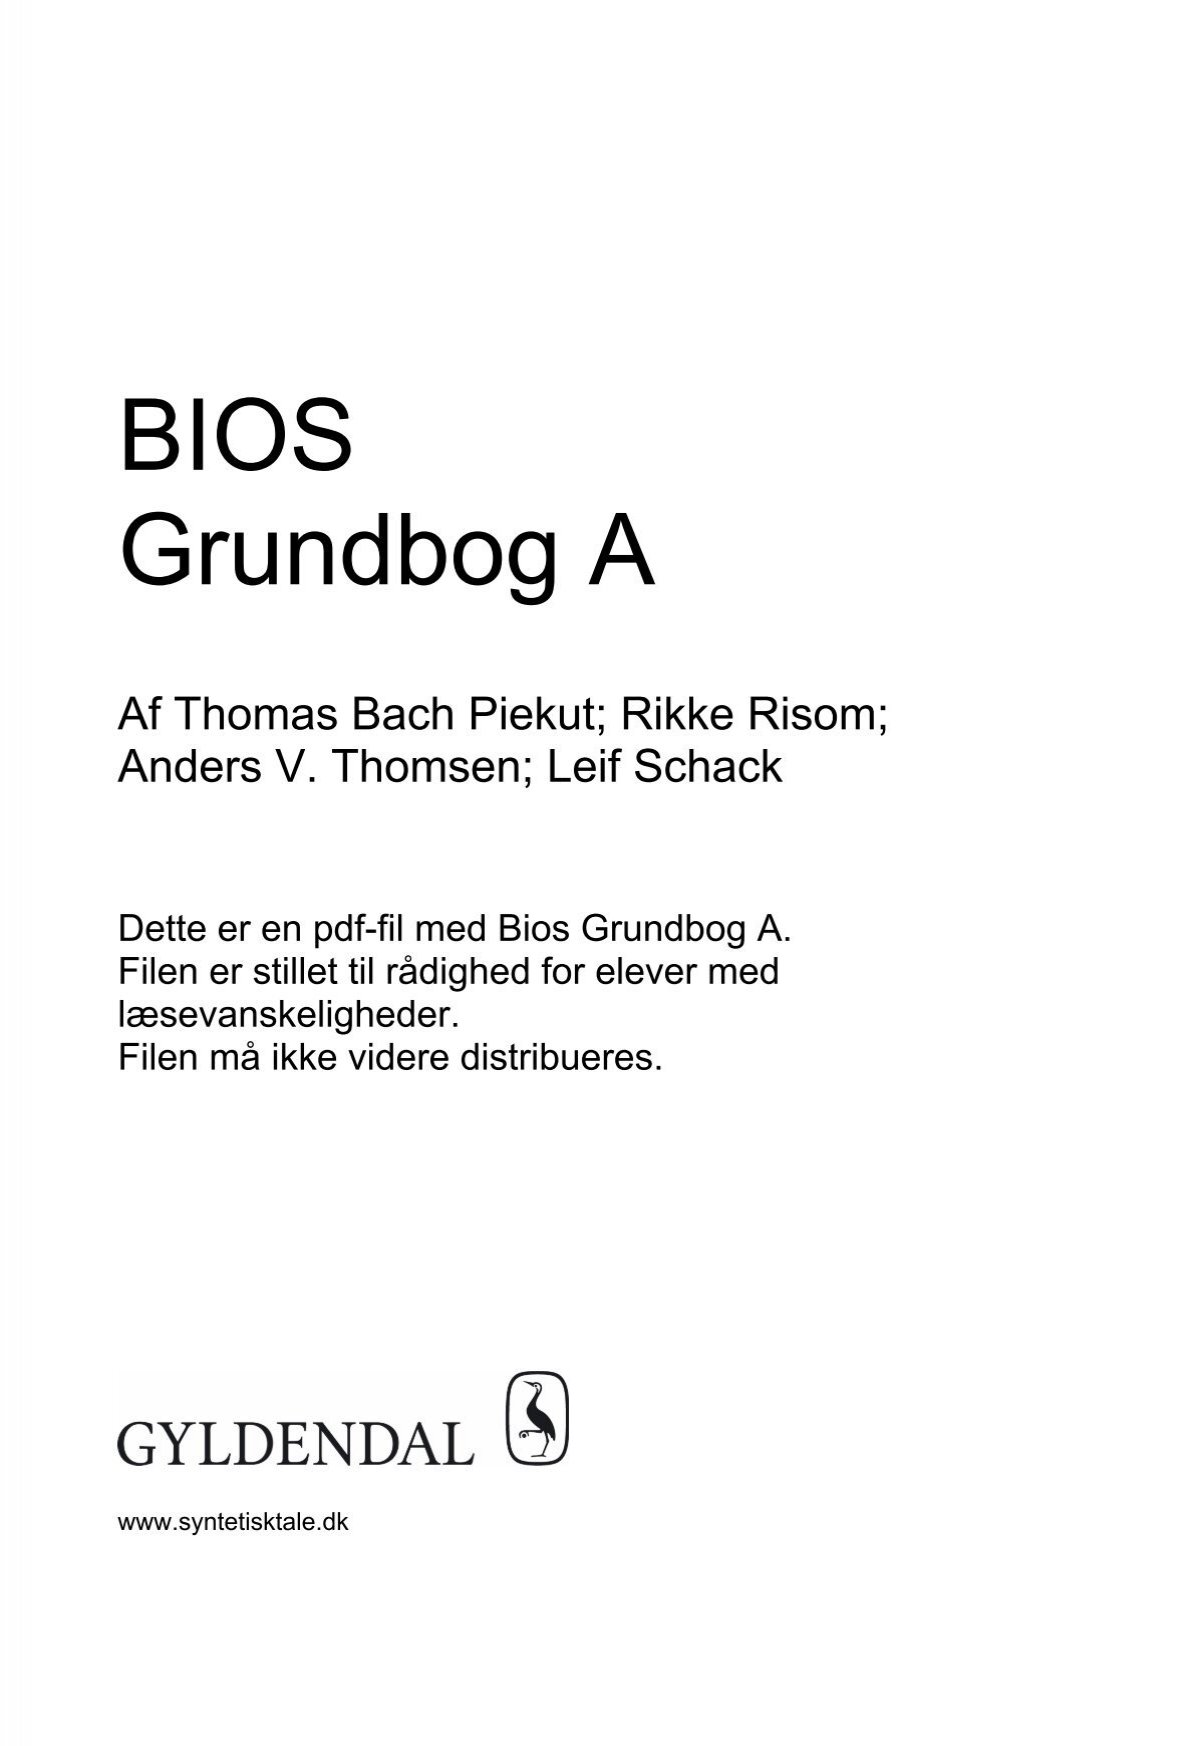 BIOS Grundbog - Syntetisk